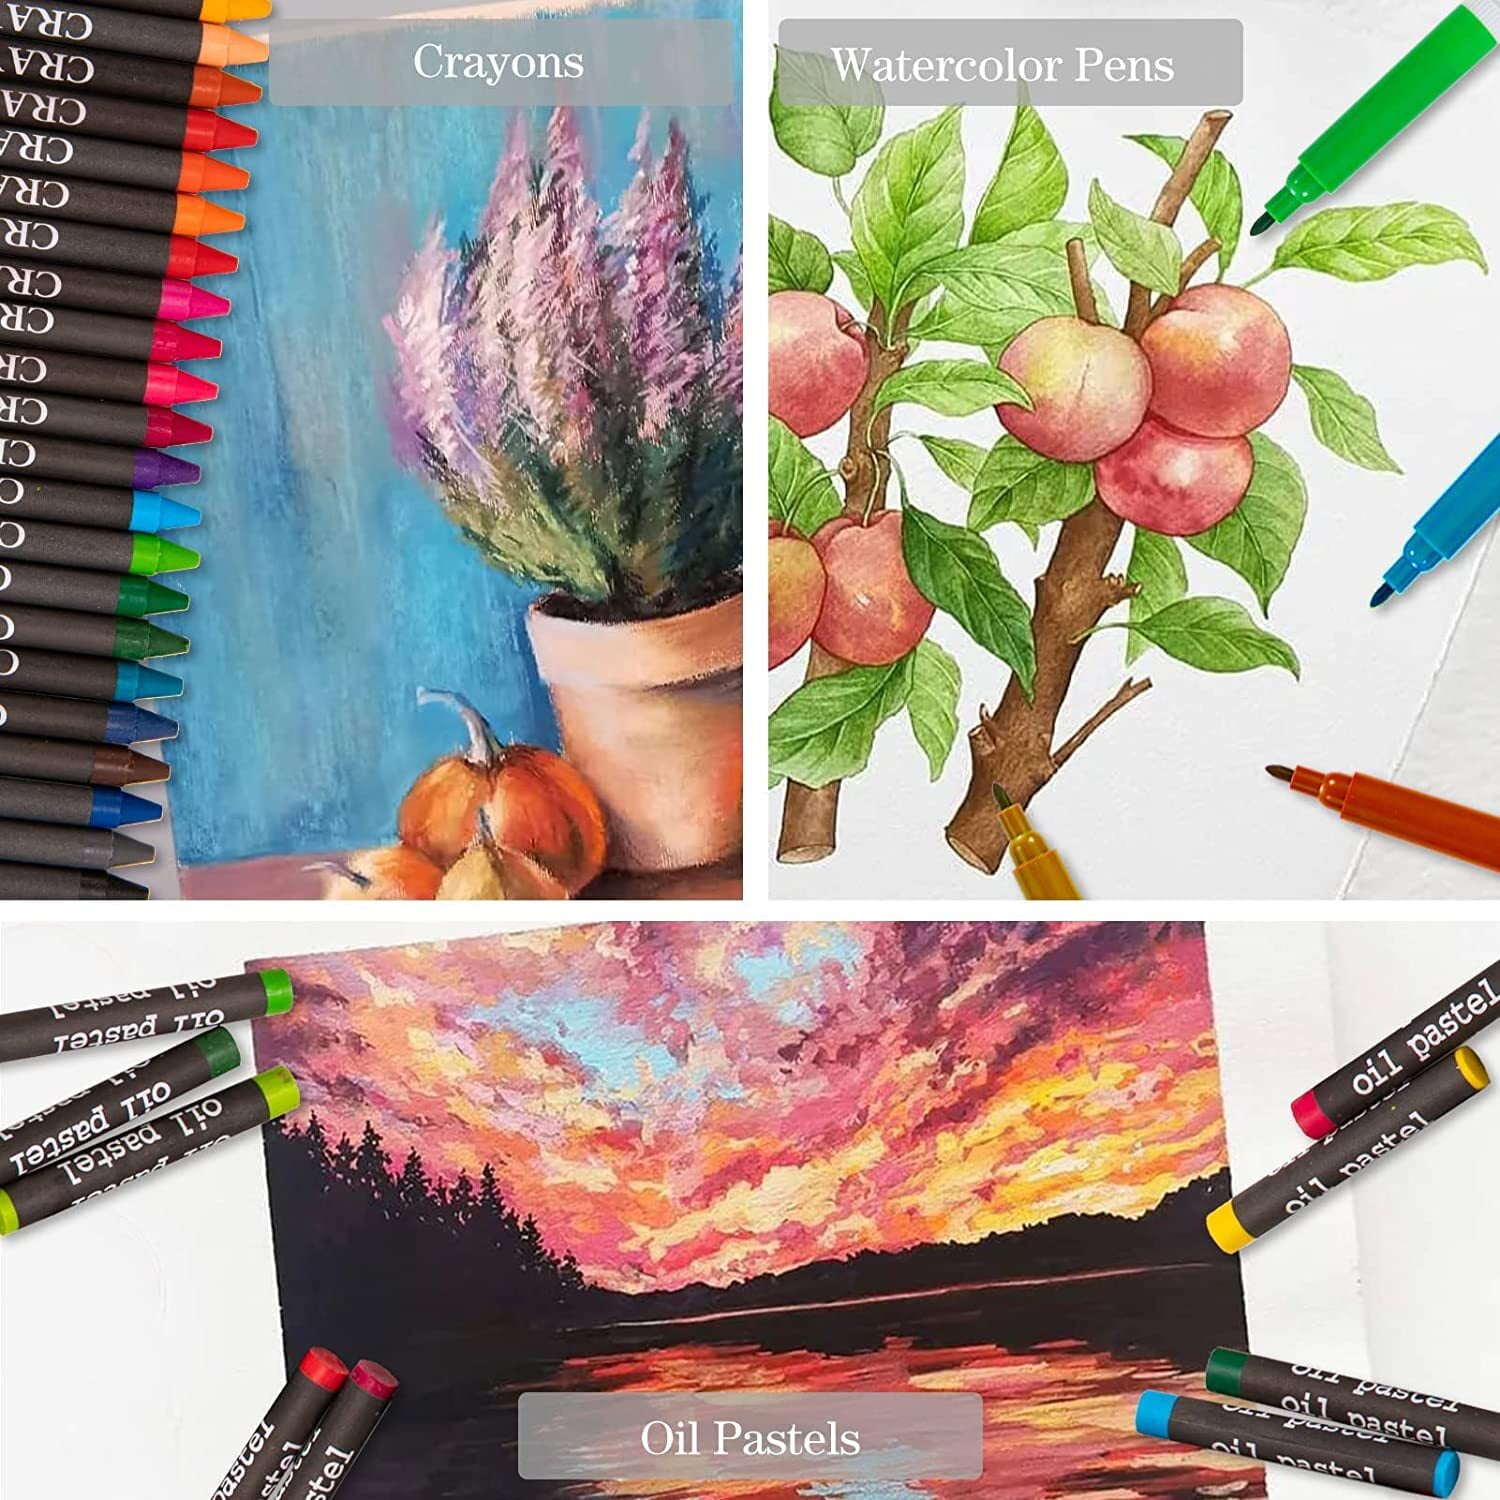 Duslogis Art Kit, 150 Pack Drawing Kits Art Supplies for Kids Girls Boys  Teens Artist, Beginners Art Set,Sketch Pad,Oil Pastels,Crayons,Colored